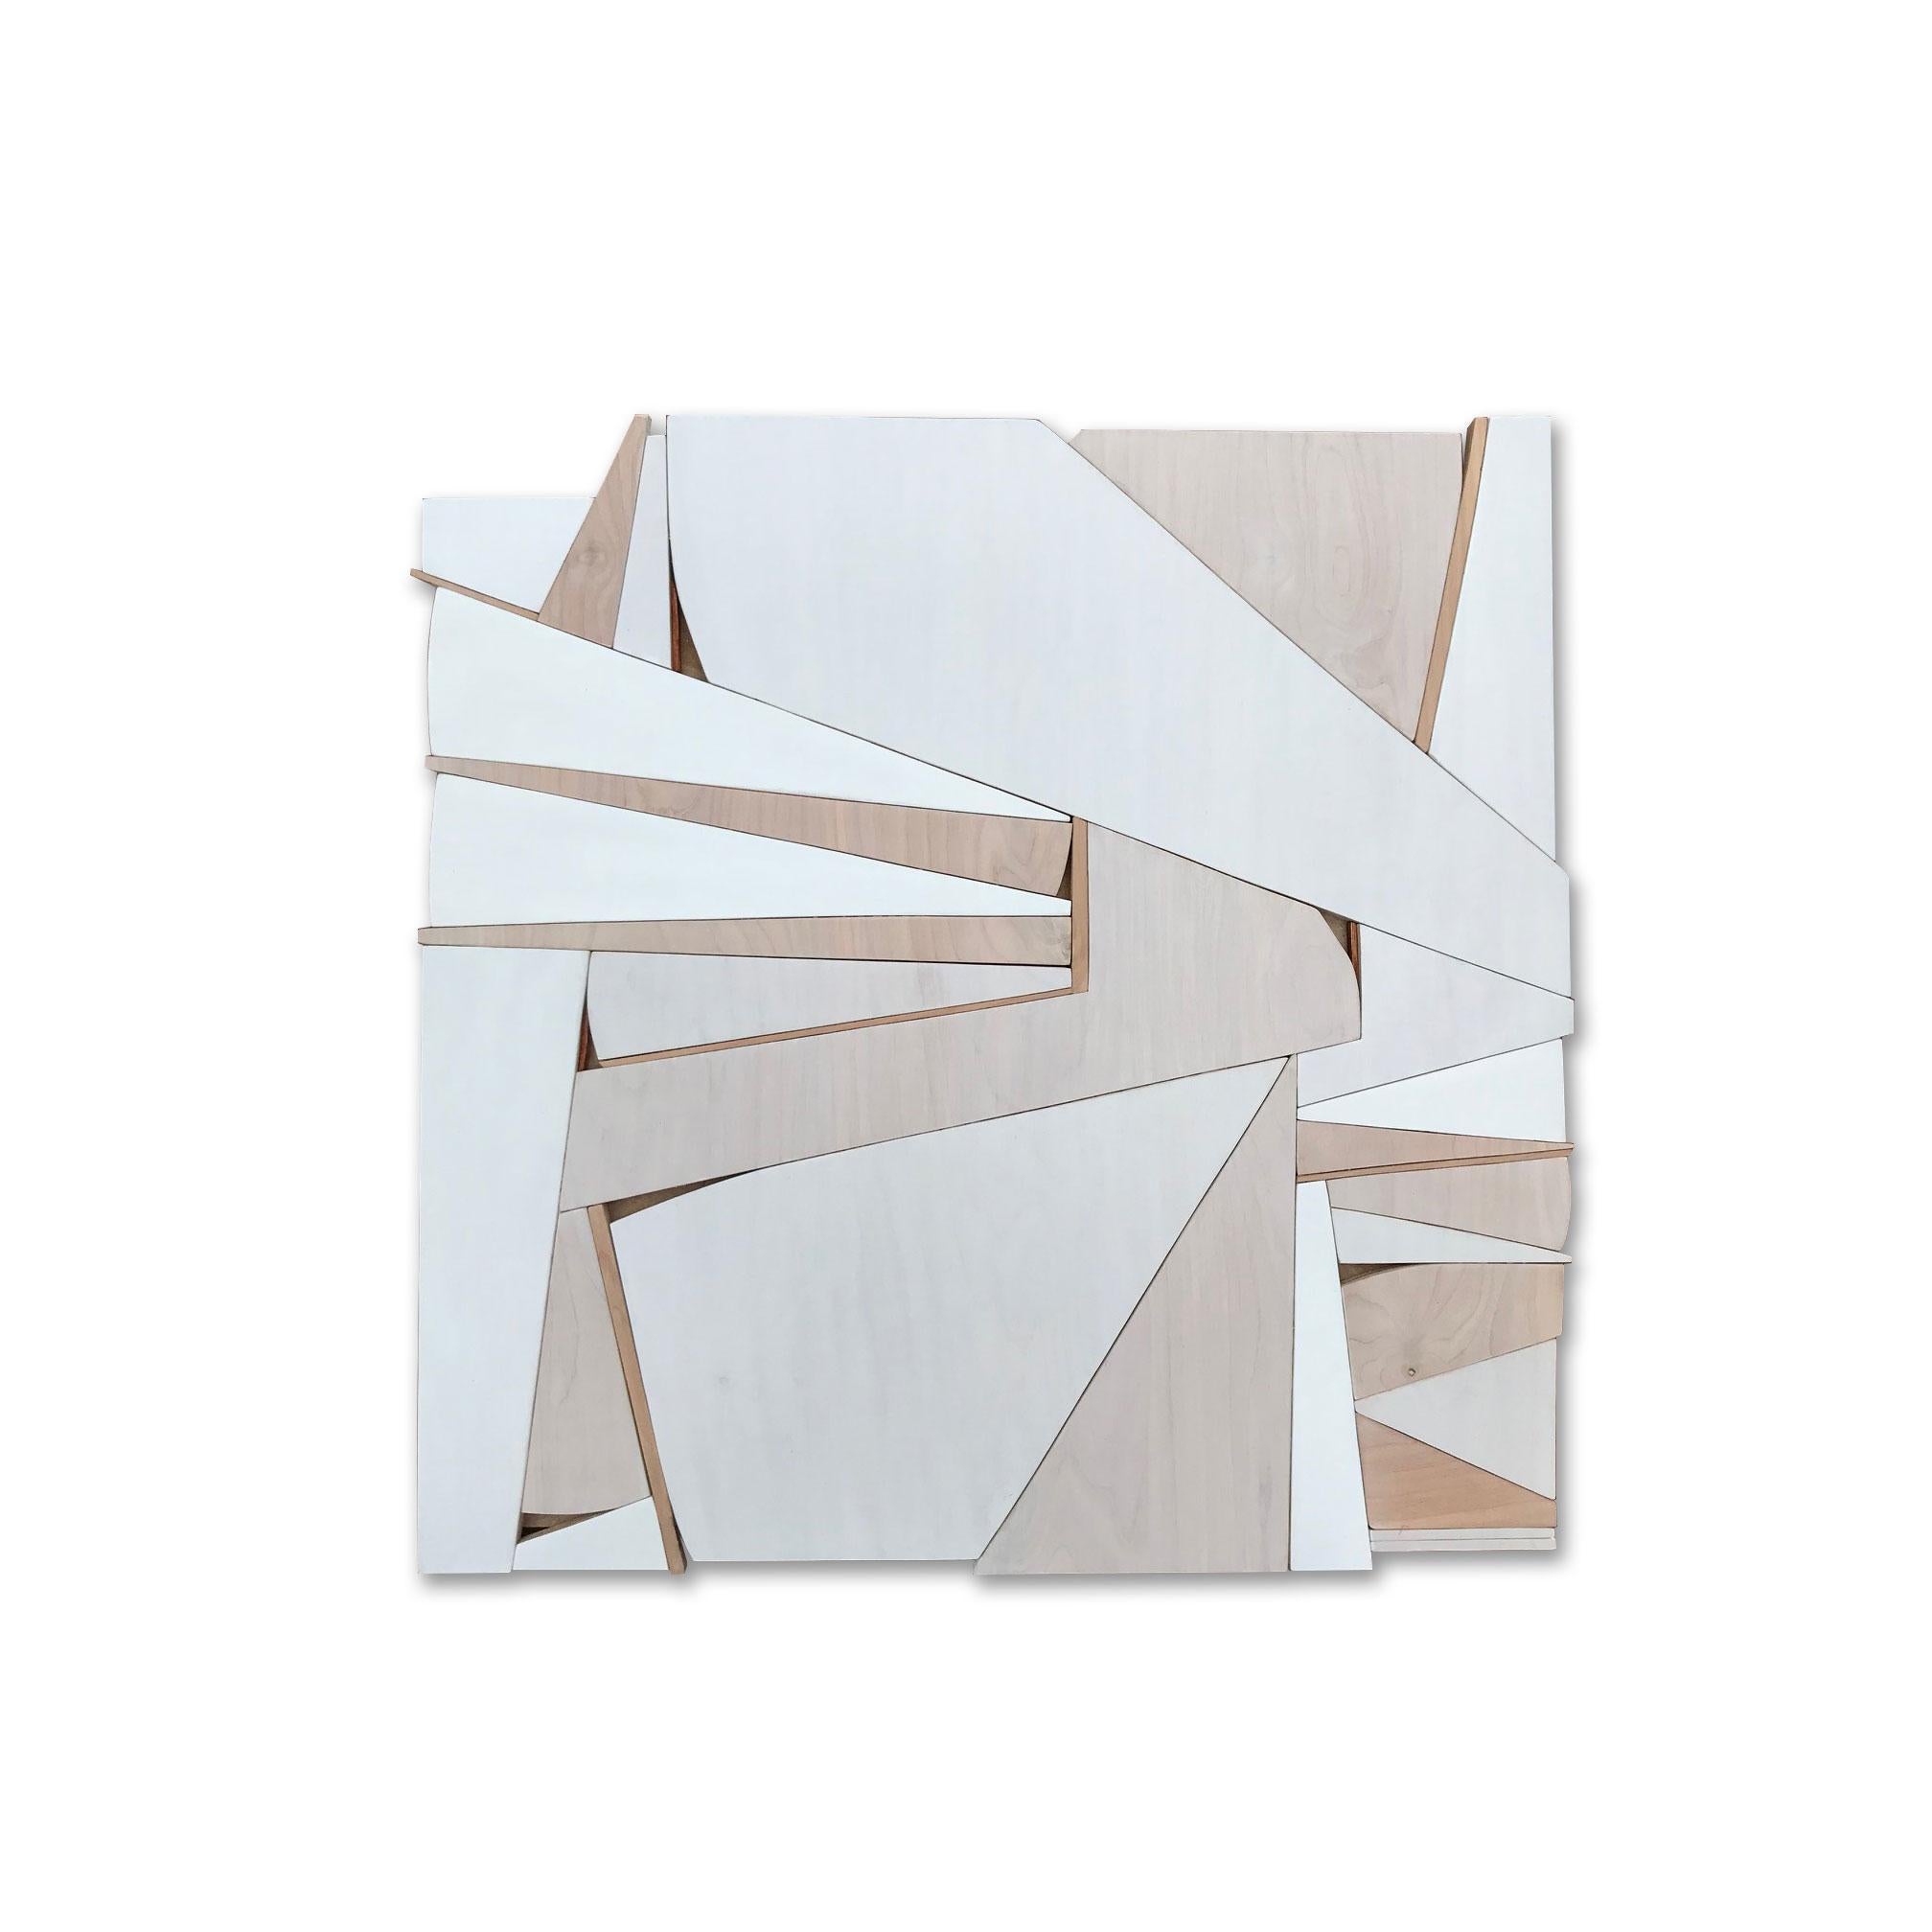 Scott Troxel Abstract Sculpture - Zigzag II (modern abstract wall sculpture minimal geometric design neutrals wood